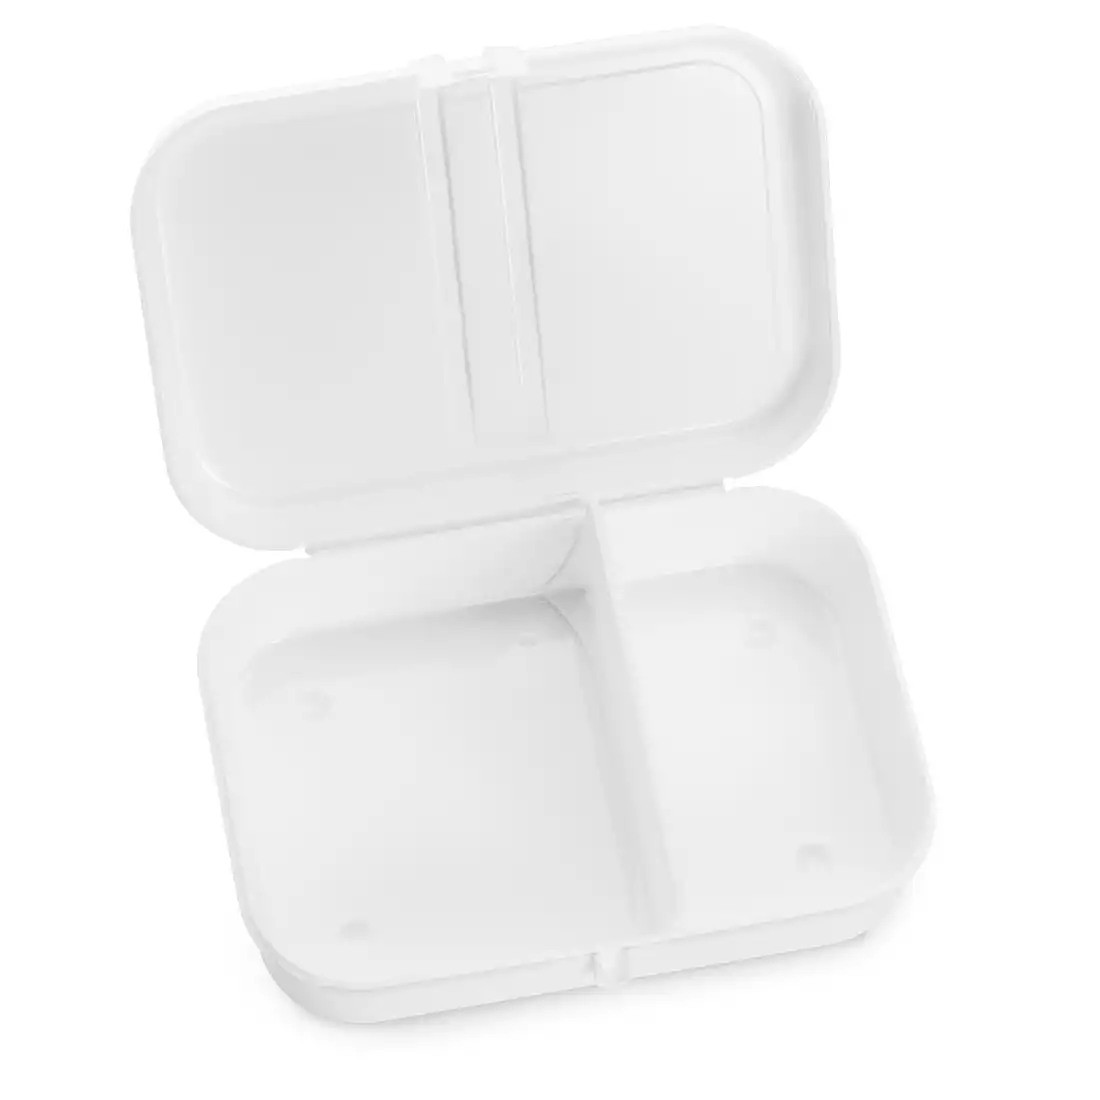 Koziol Pascal L lunchbox z separatorem, biały